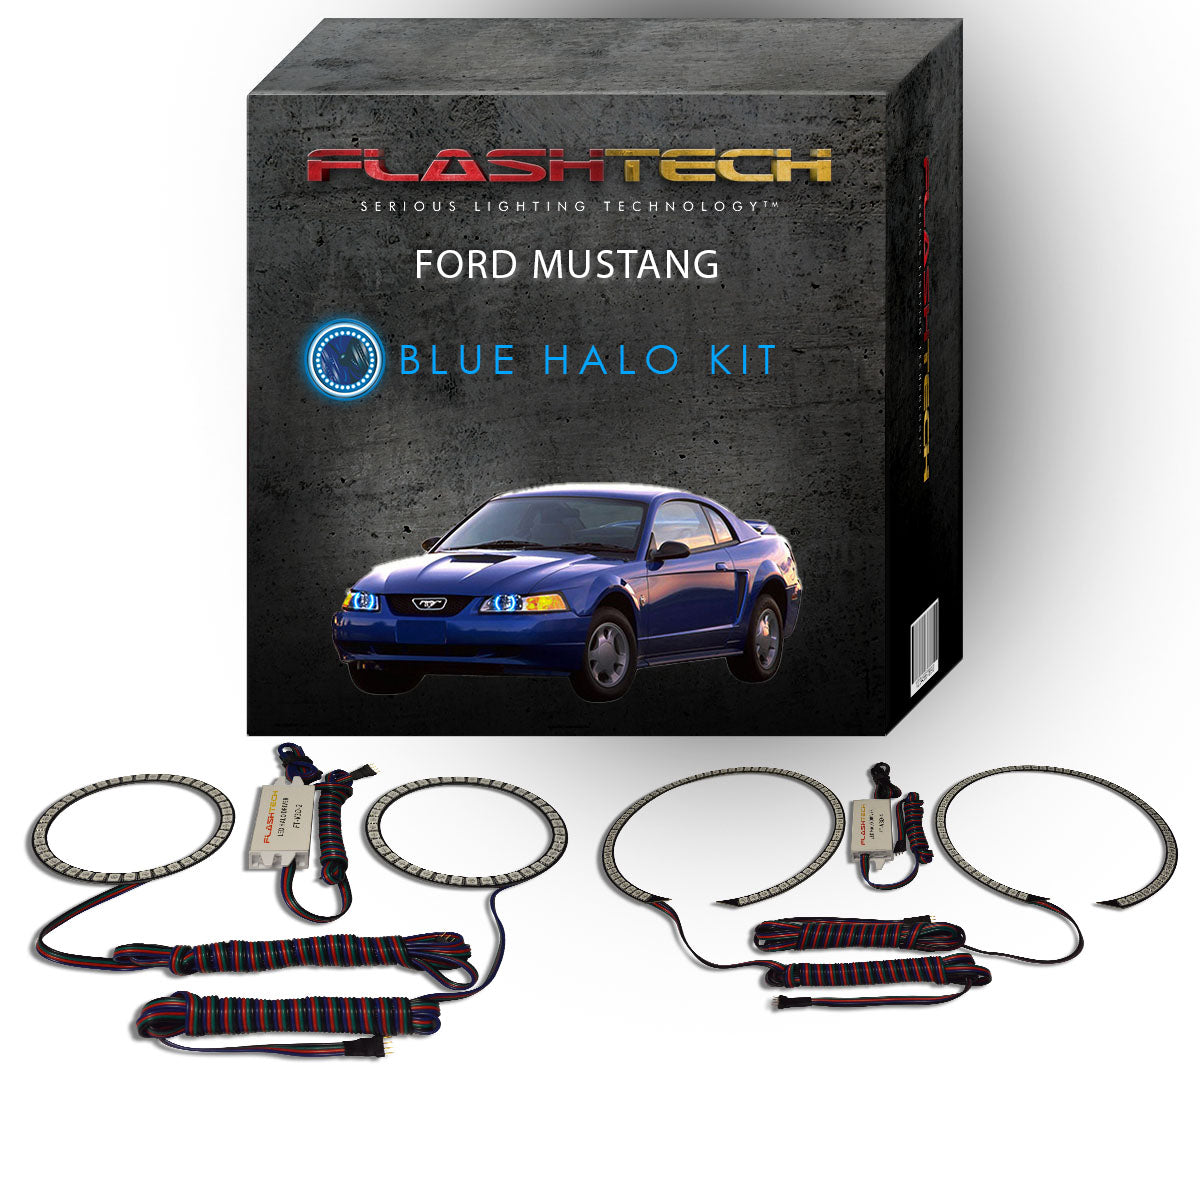 Ford-Mustang-1999, 2000, 2001, 2002, 2003, 2004-LED-Halo-Headlights-RGB-No Remote-FO-MU9904-V3H